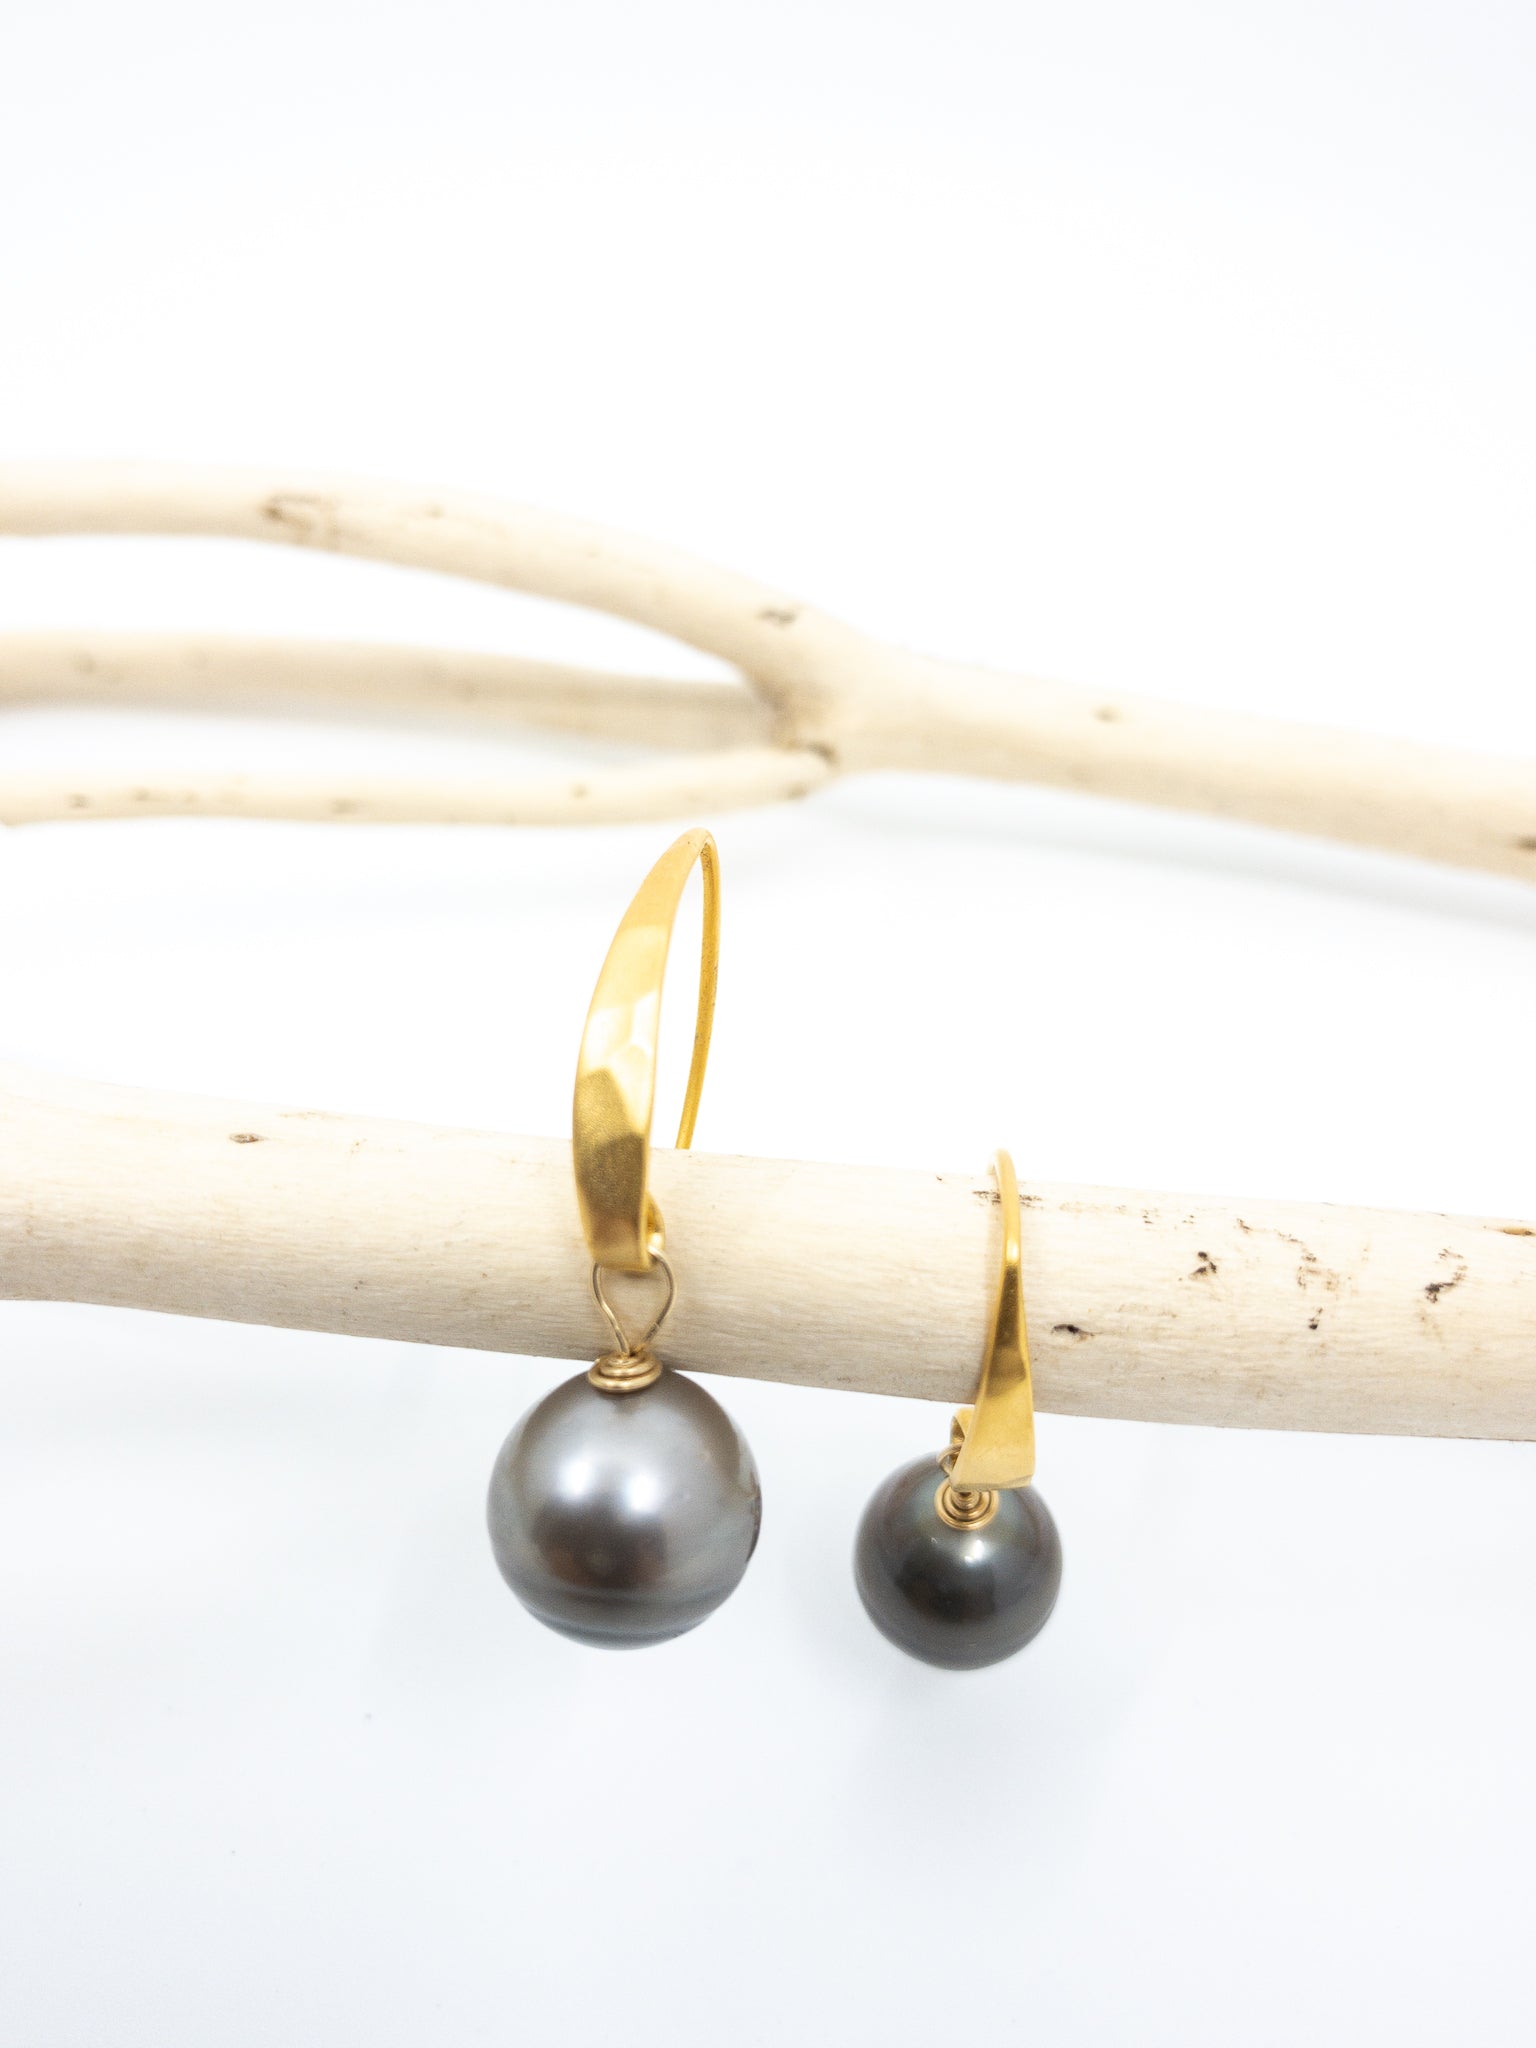 tahitian pearls gold earrings by eve black jewelry hawaii